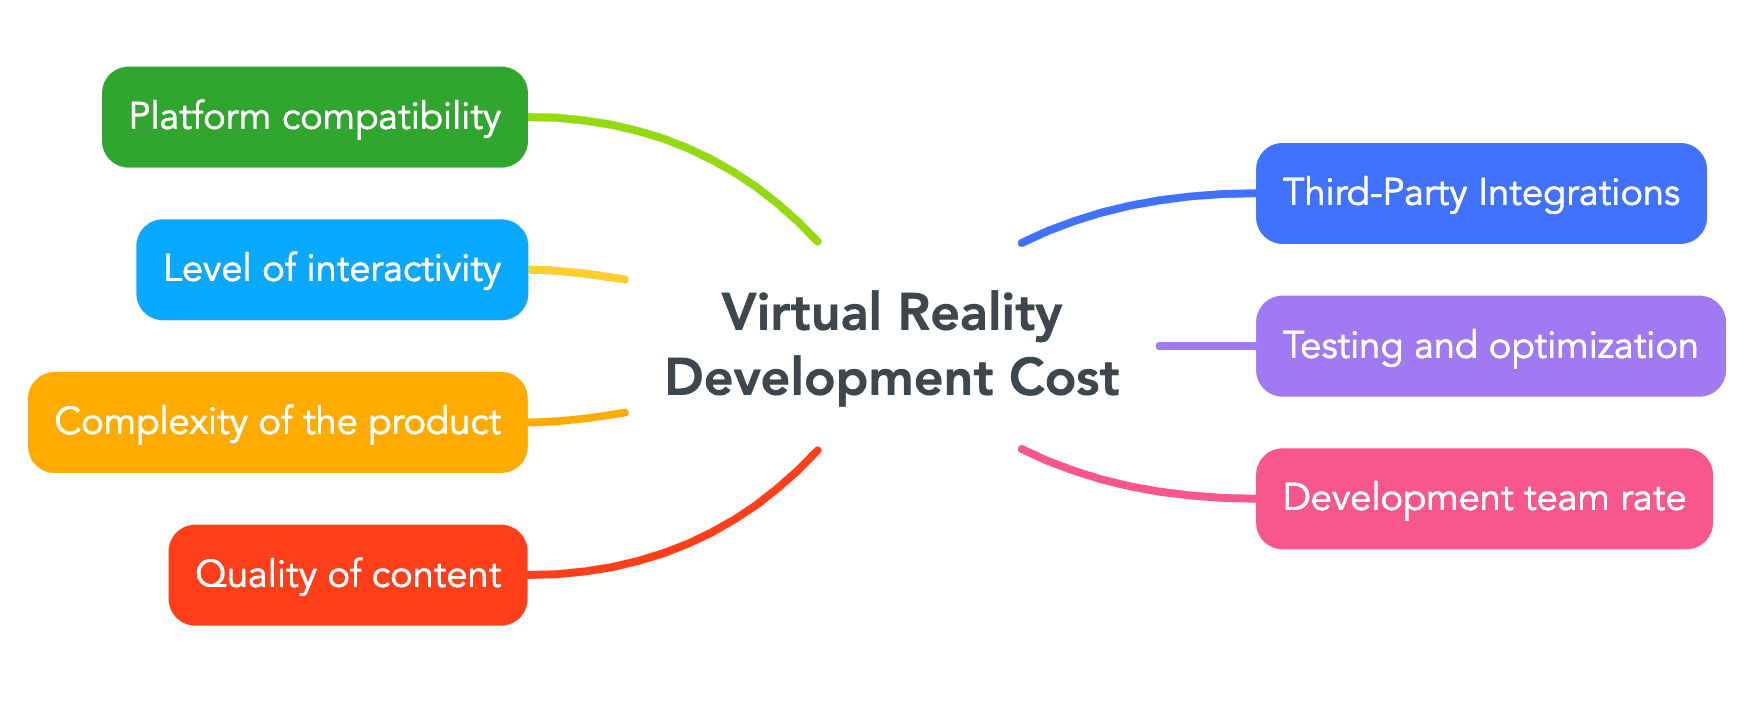 Main virtual reality development cost factors